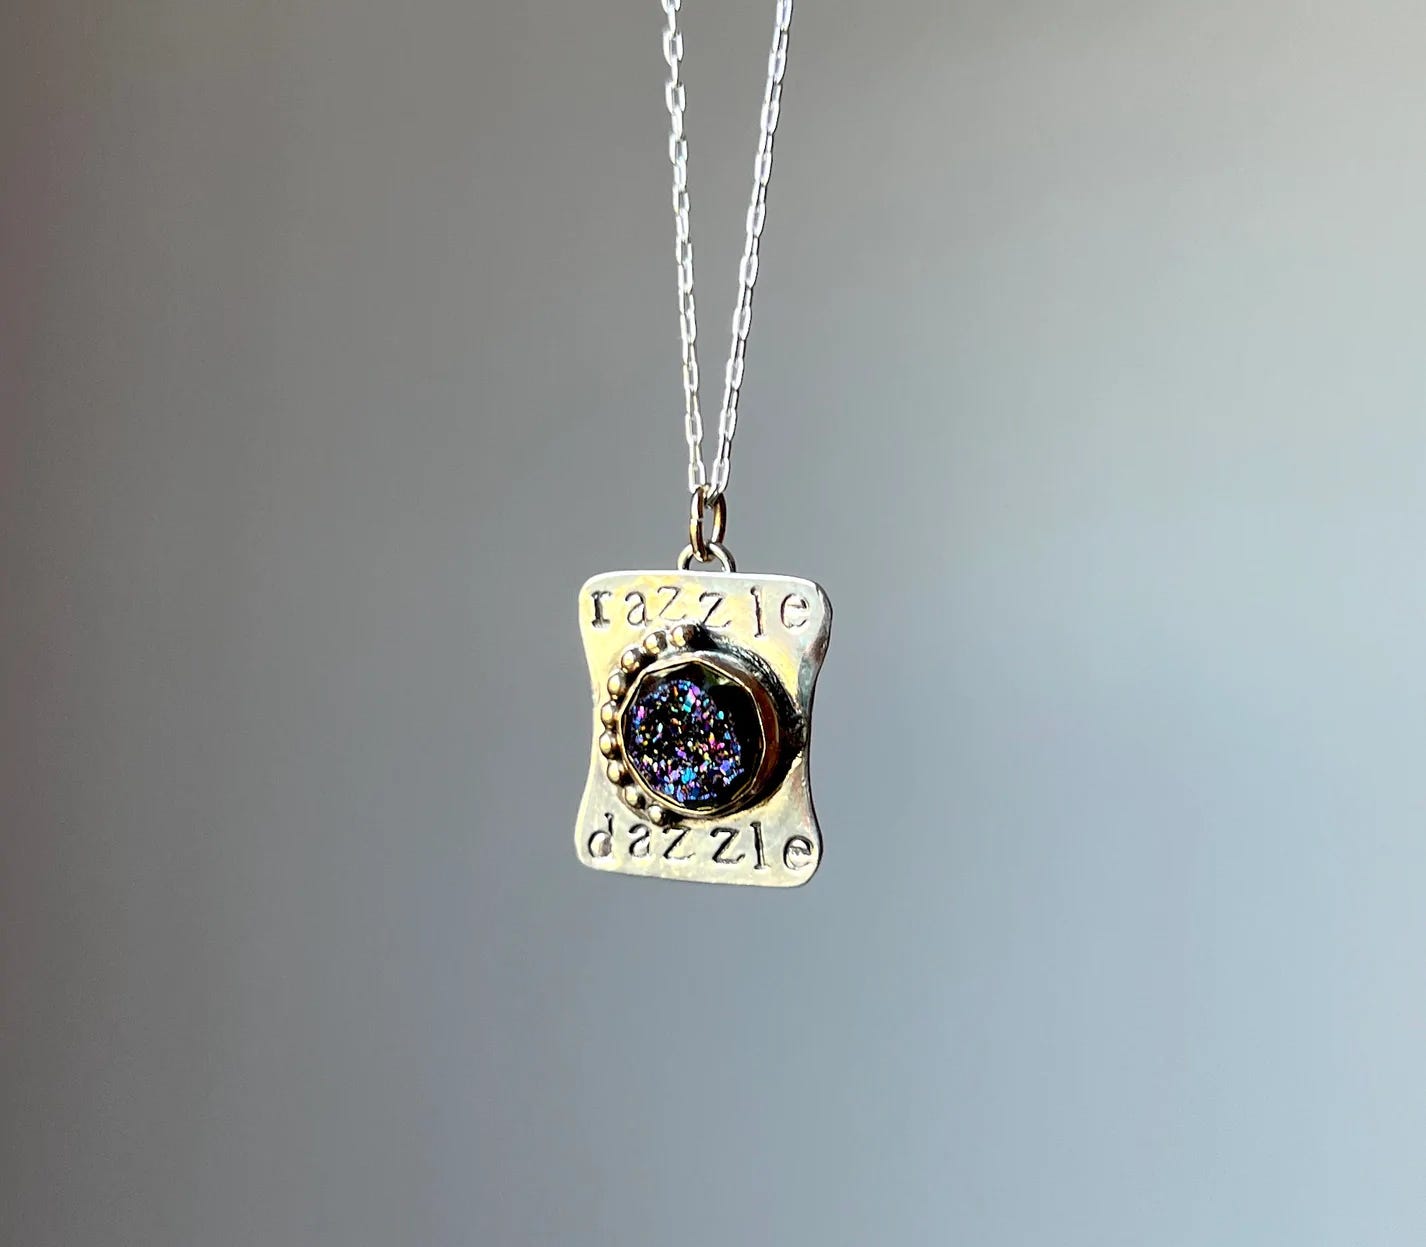 A sparkling necklace that says "razzle dazzle" by Rachel Pfeffer